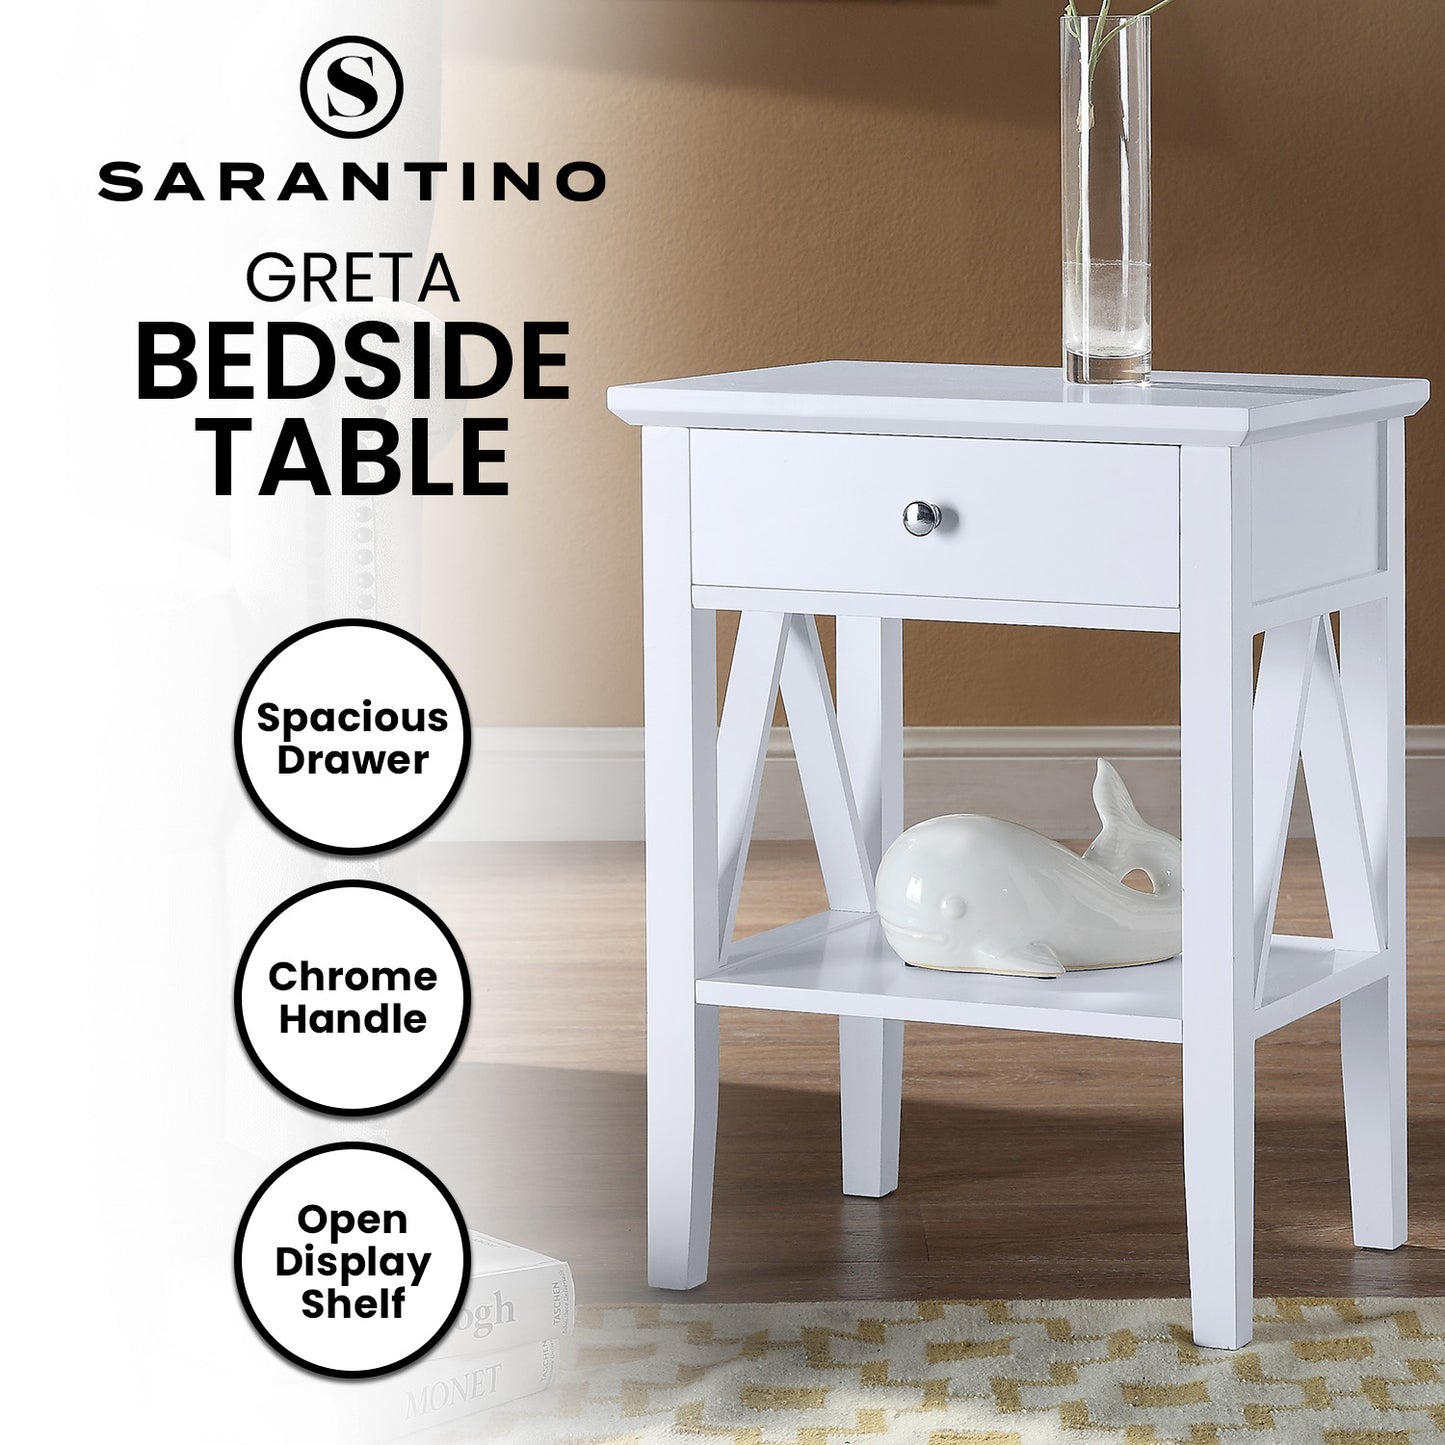 Sarantino Greta Bedside Table with Drawer - White